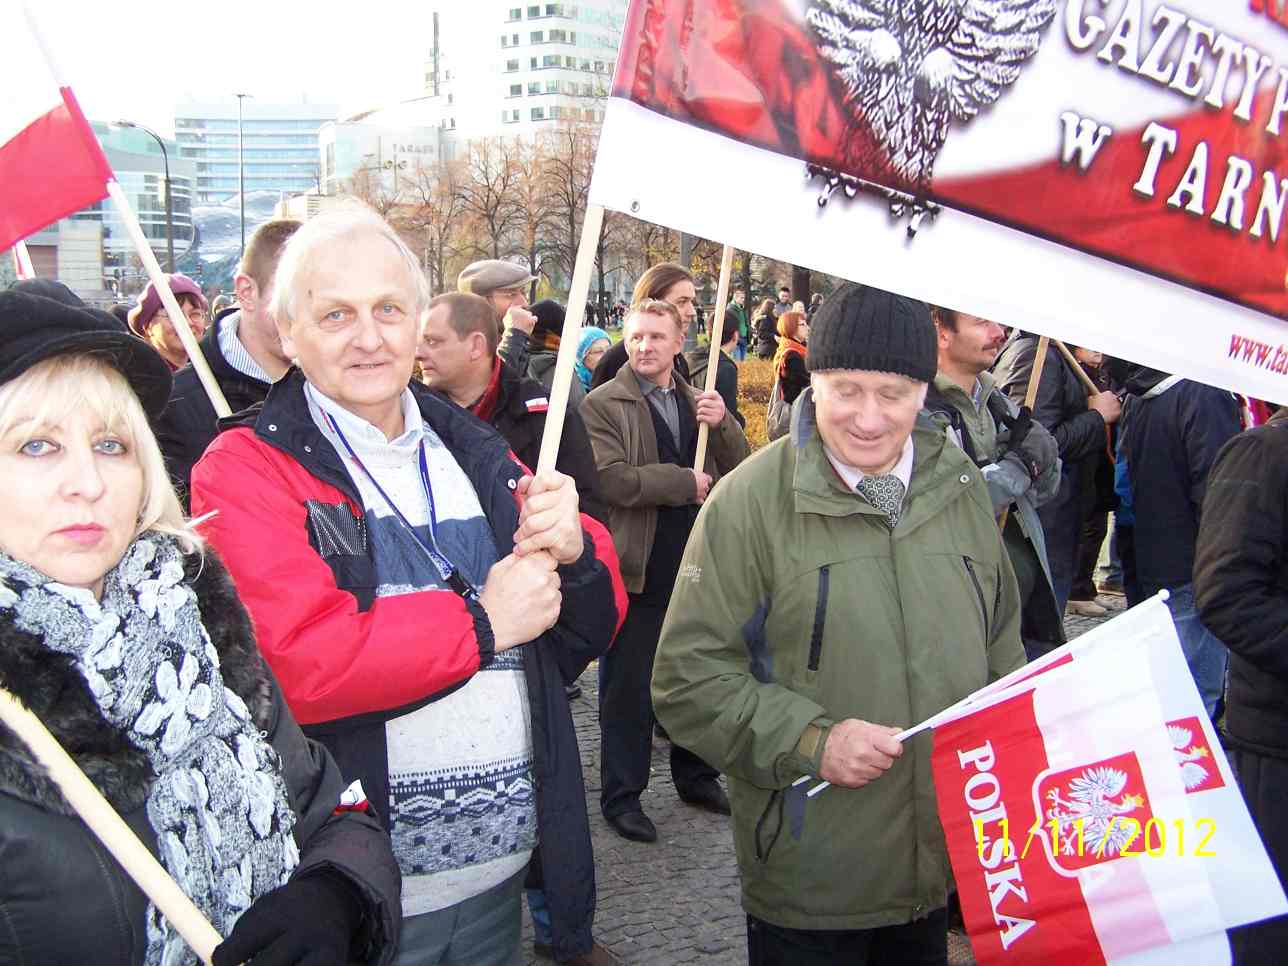 III Marsz Niepodlegoci ,Warszawa, 11.11.2012